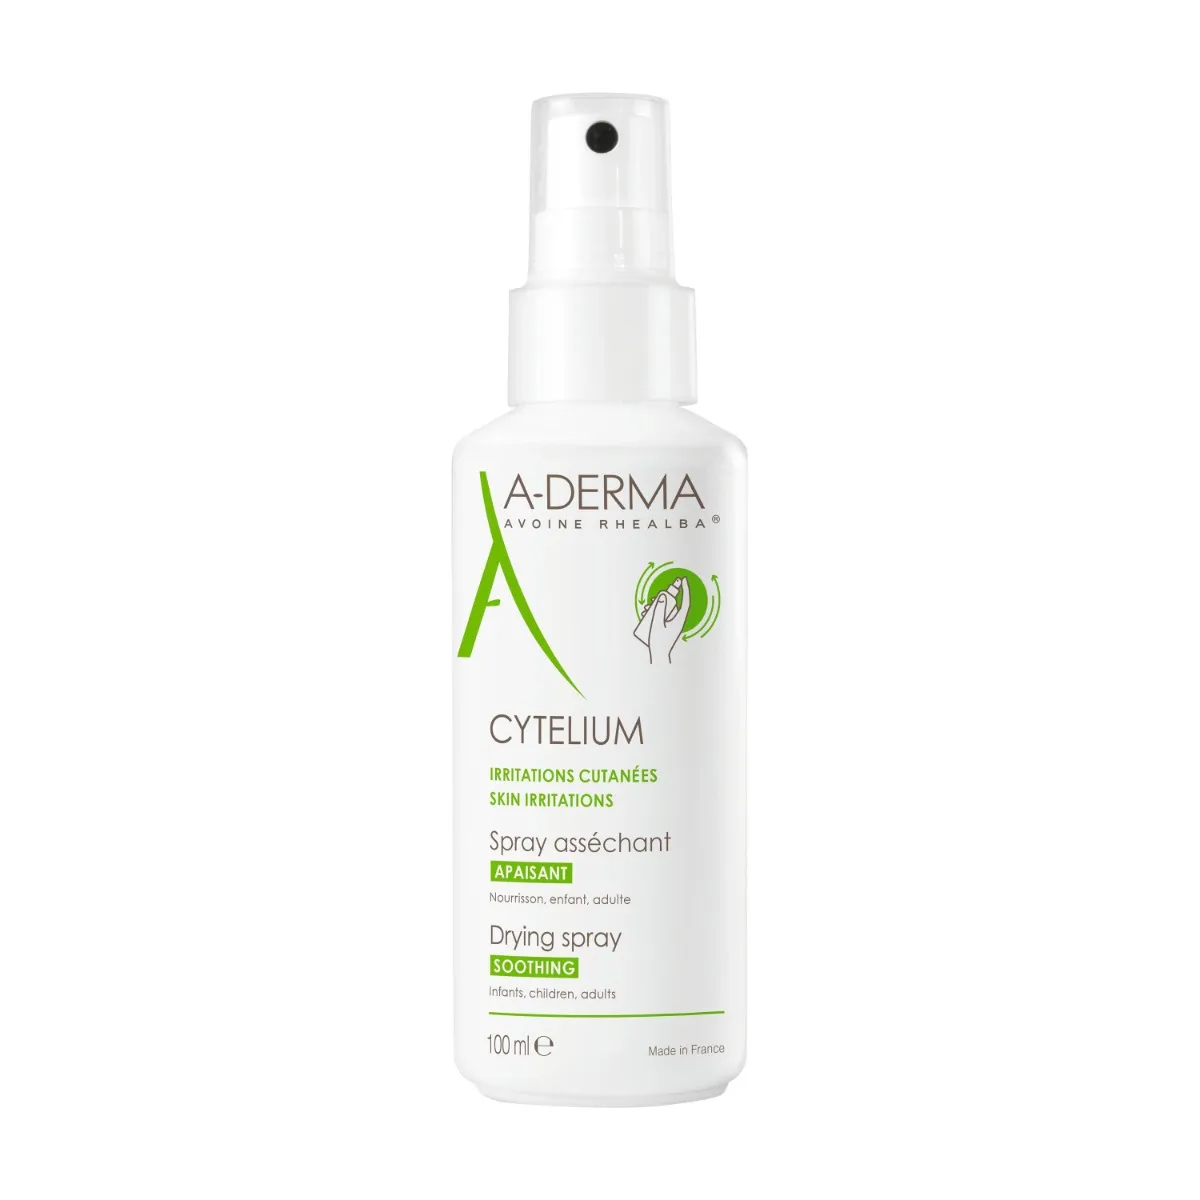 a-derma-cytelium-spray-assechant-100ml-3282770104783